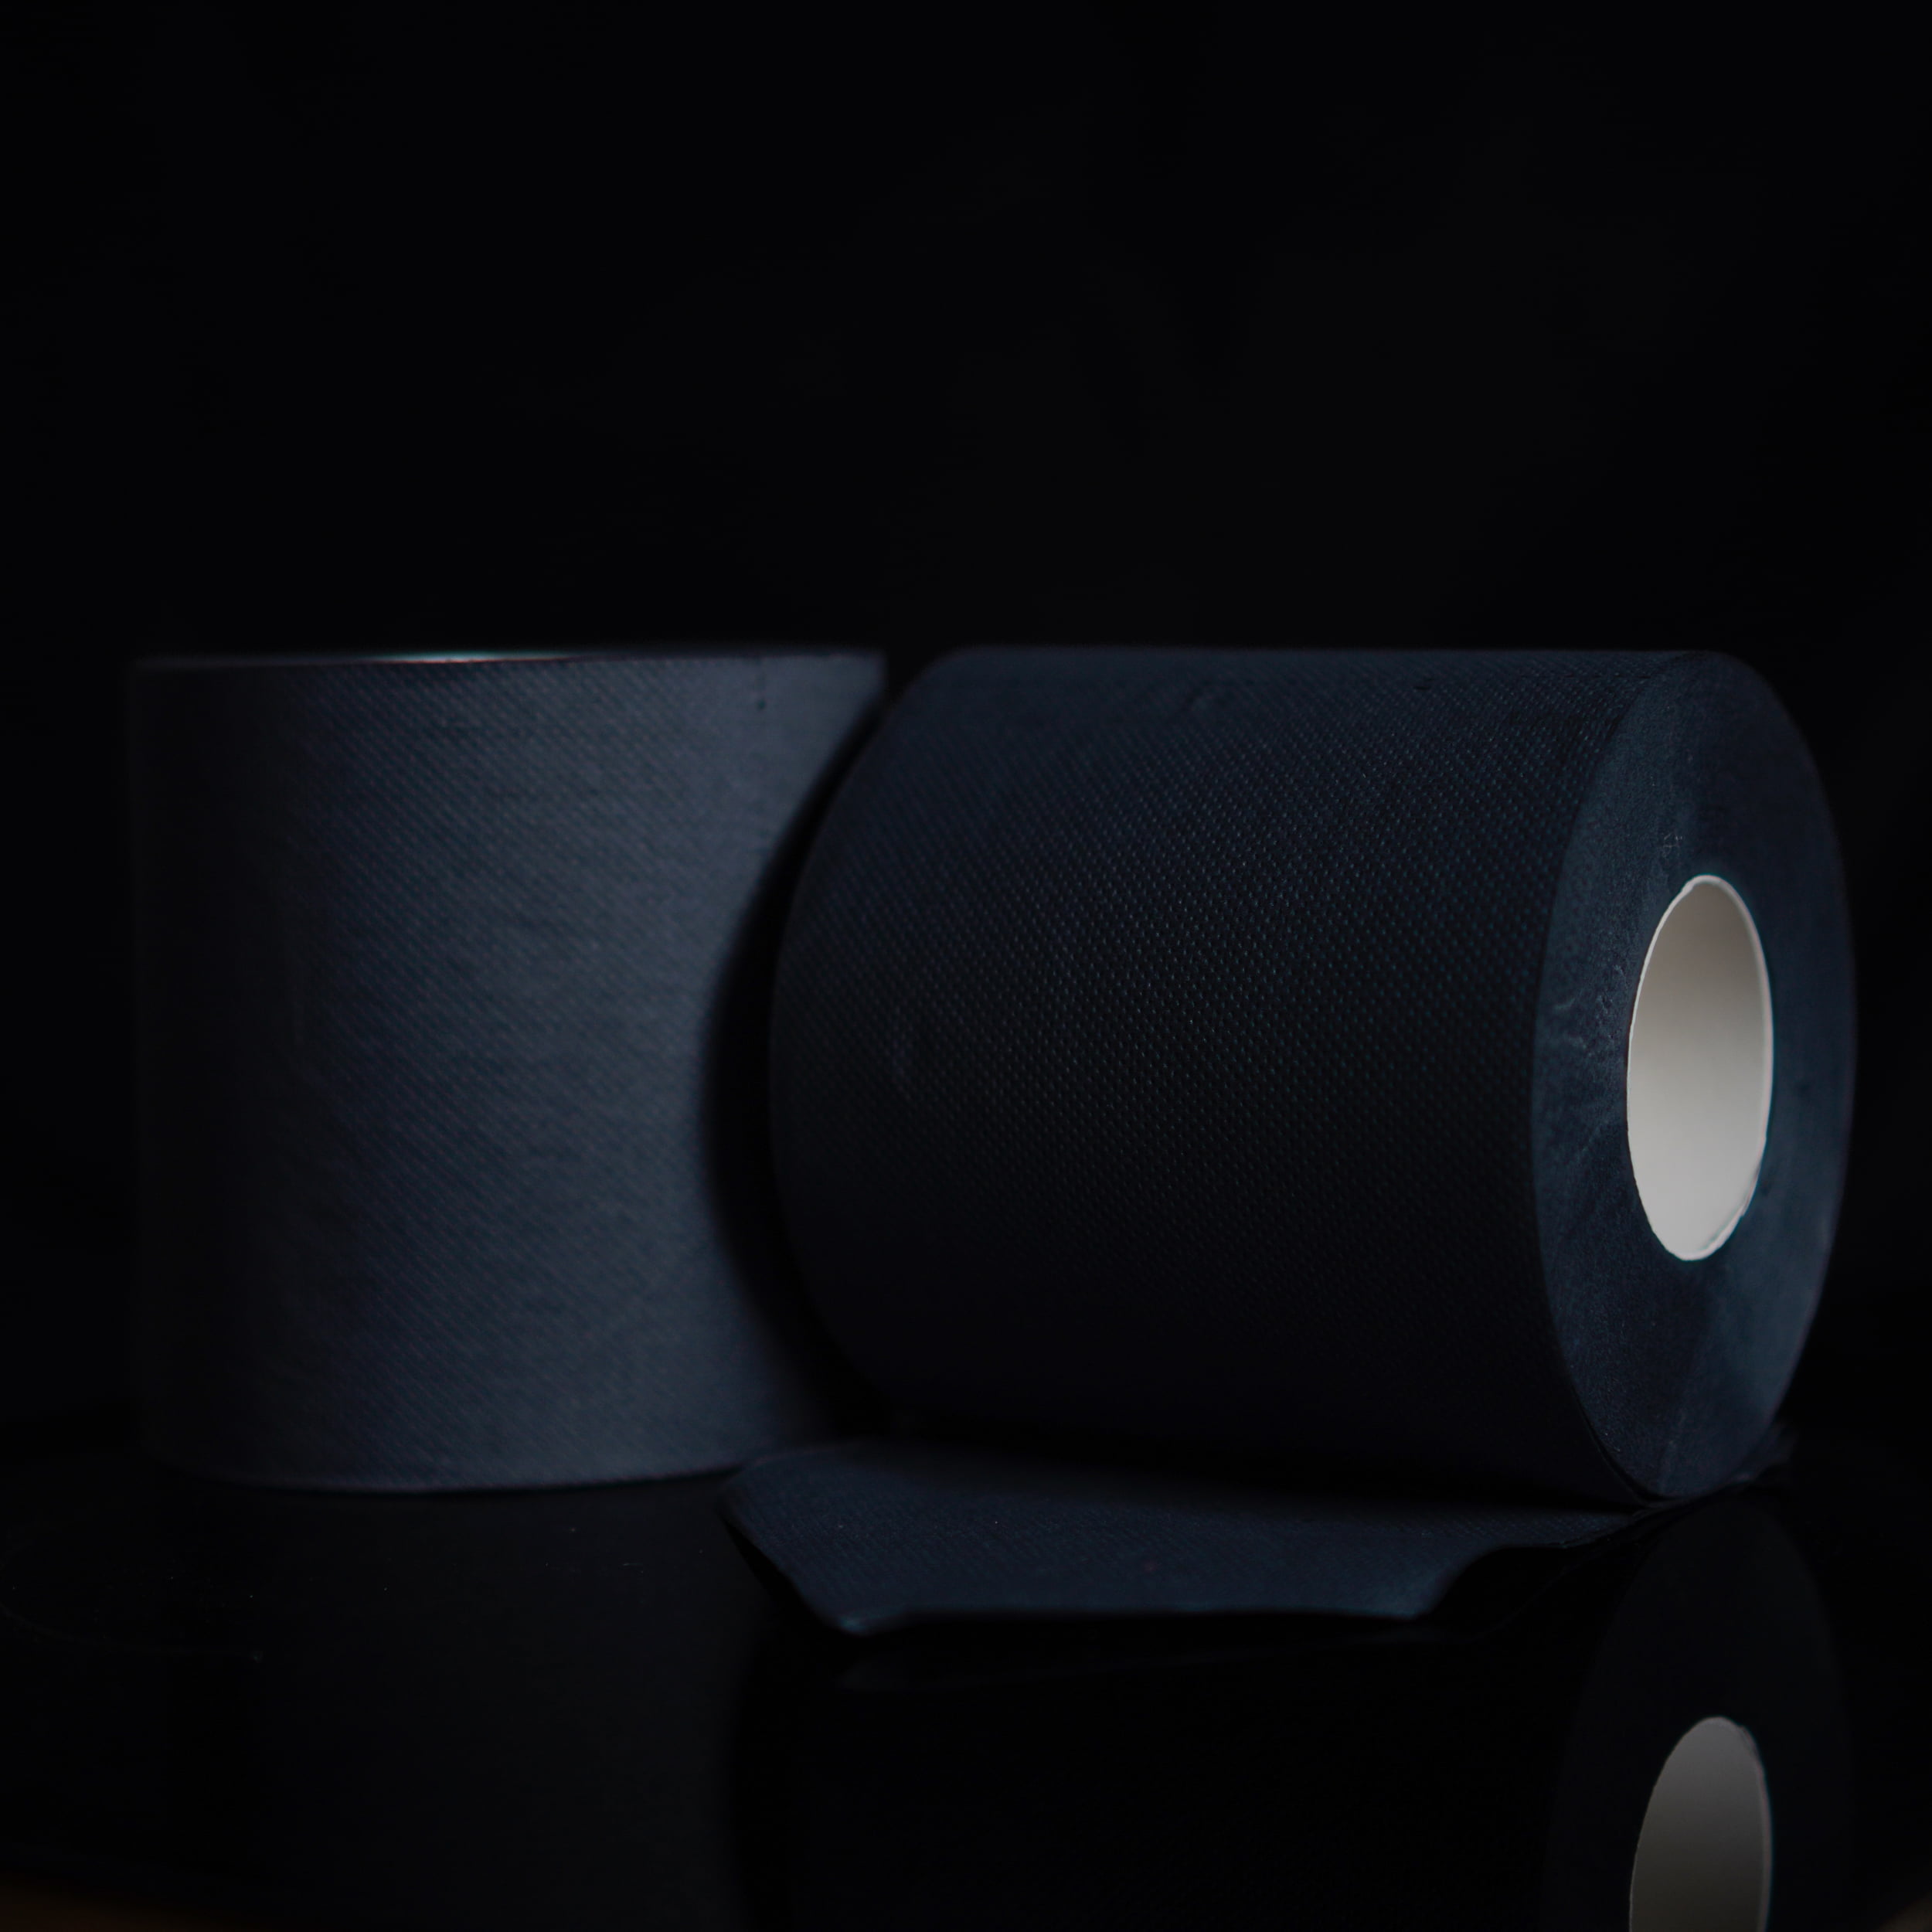 Mondo Medical 3 Ply Black Colored Bathroom Tissue Toilet Paper - 6